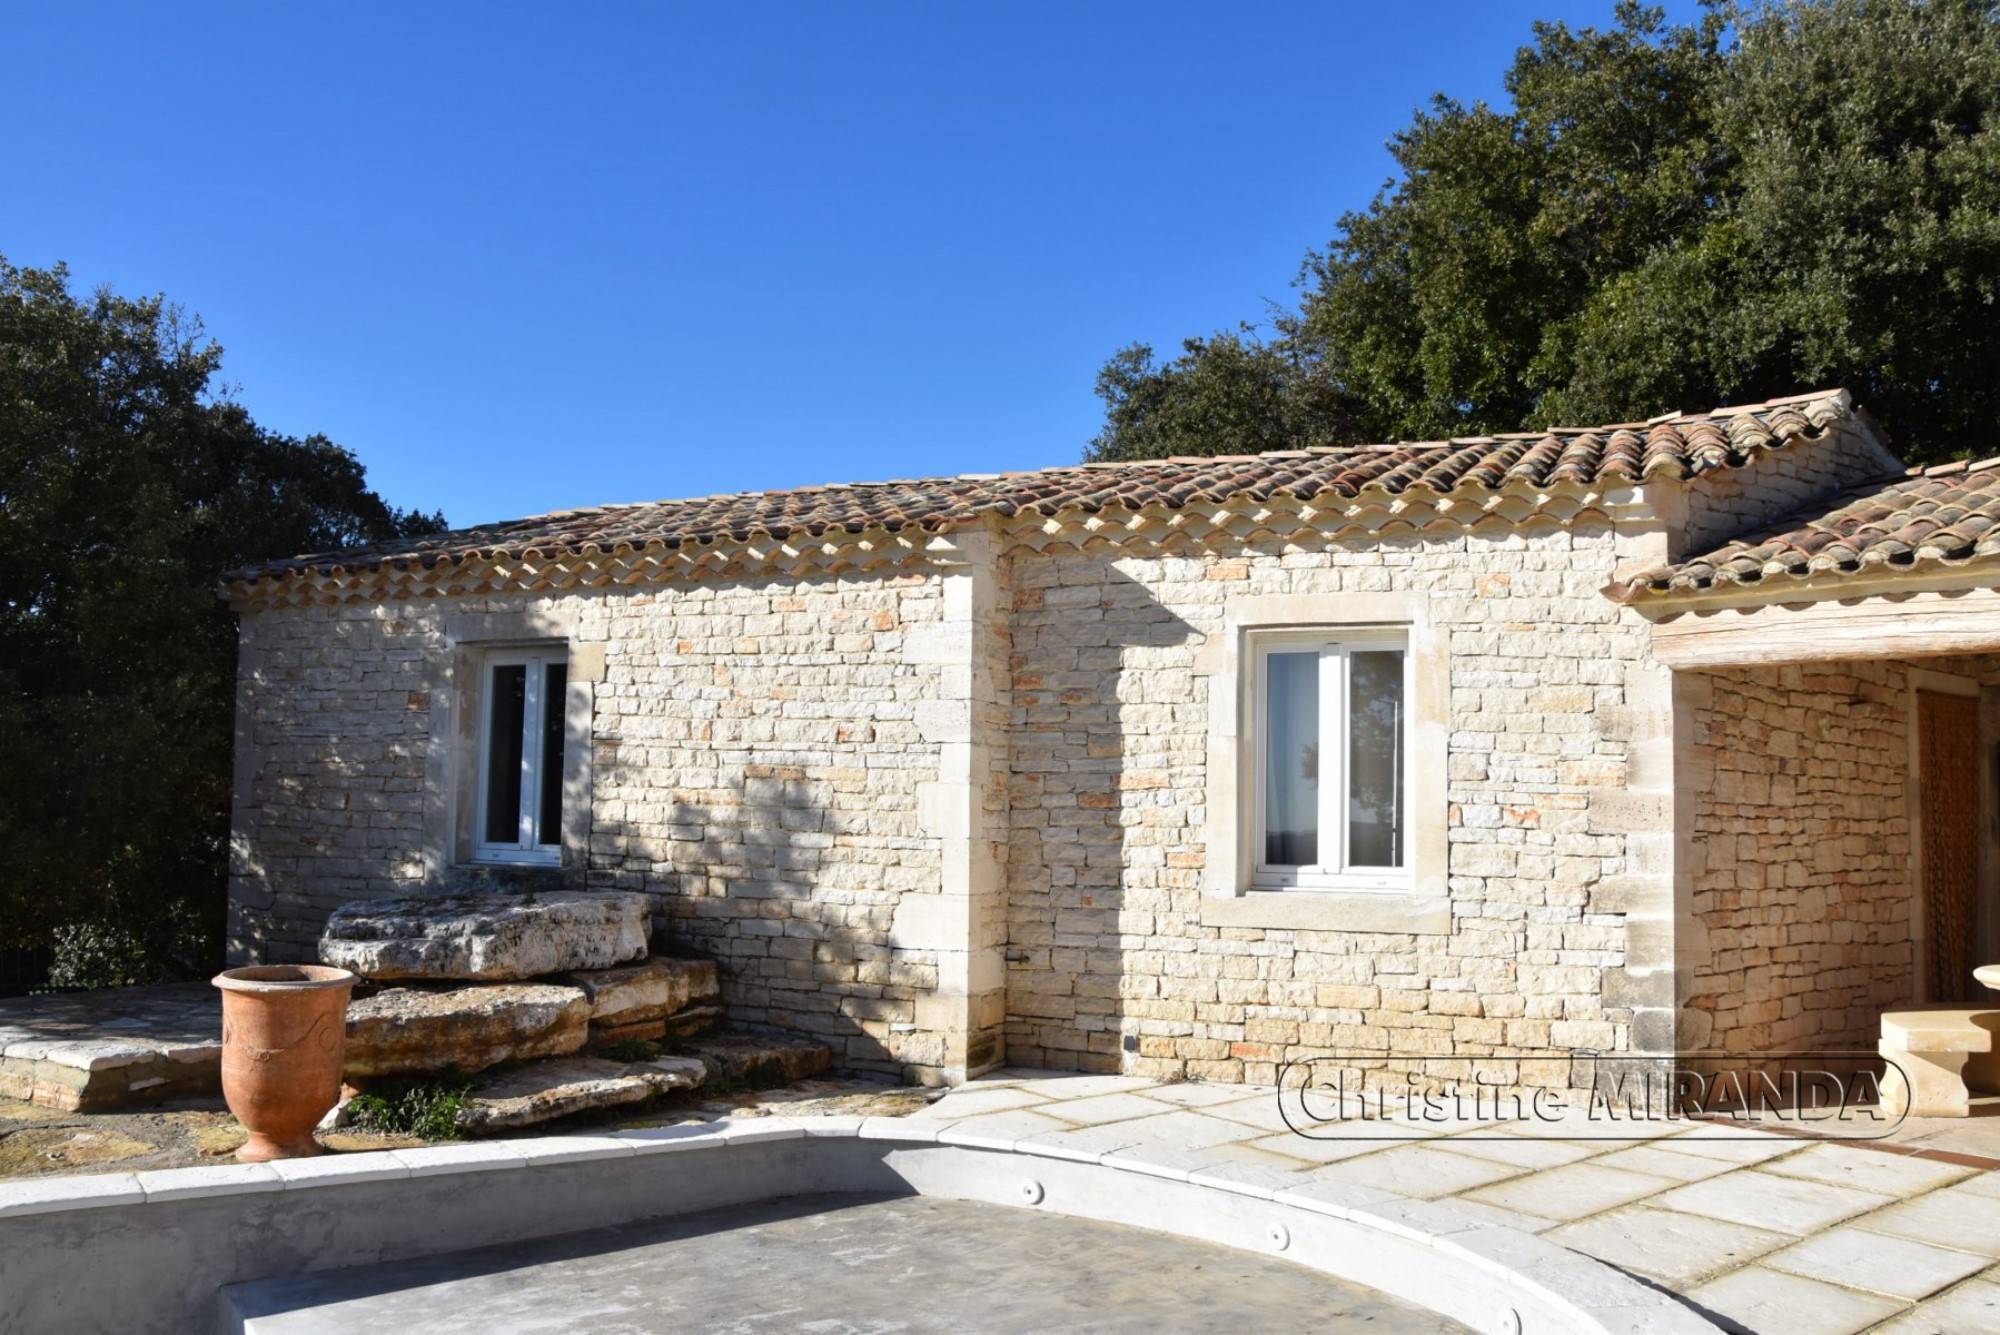 A vendre Villa en pierre Nord Gard avec piscine